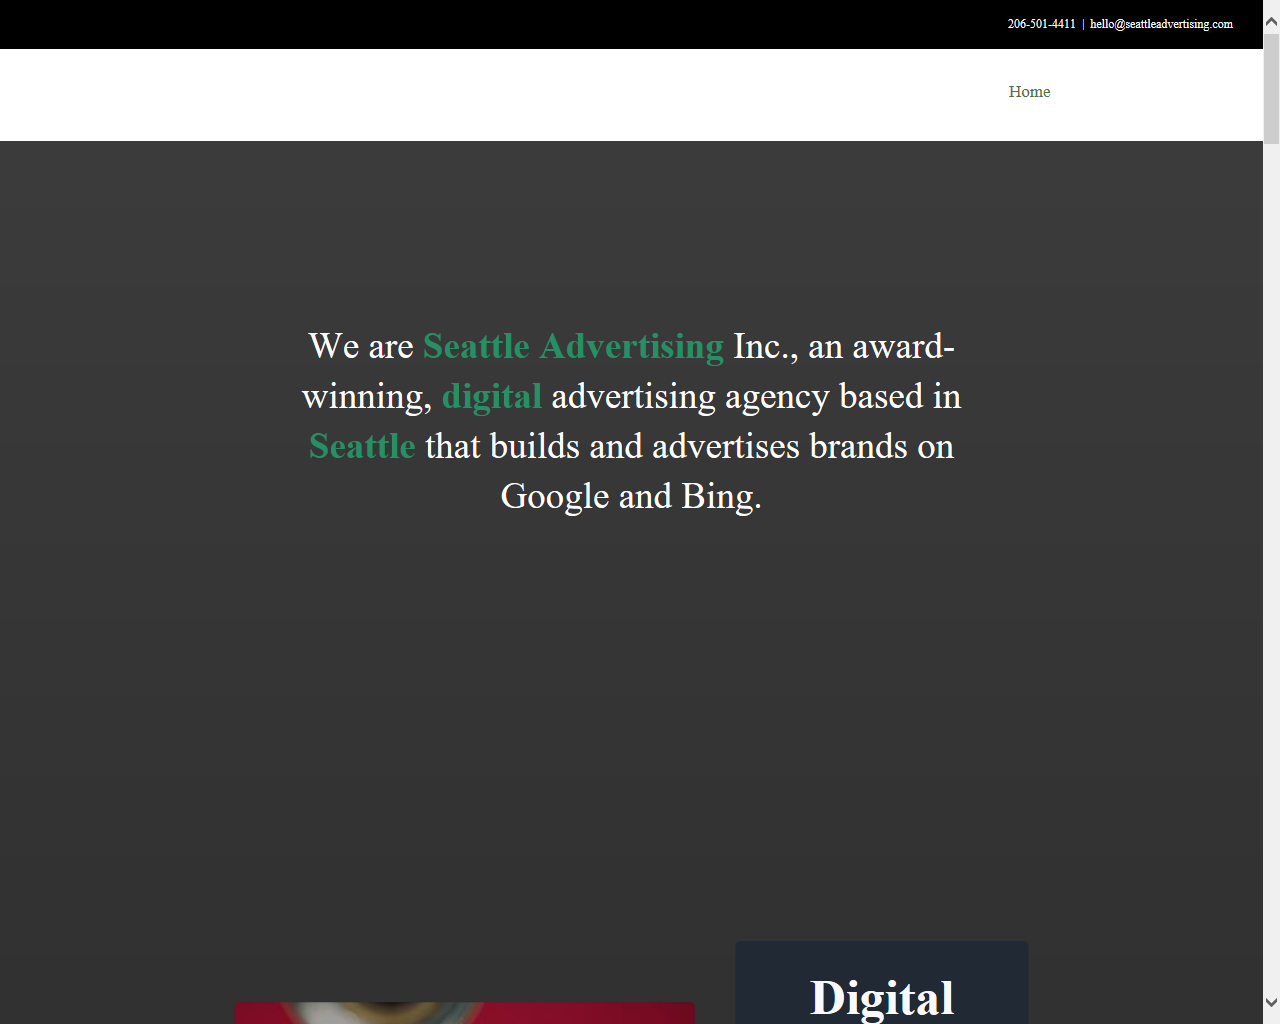 Seattle Advertising, Inc